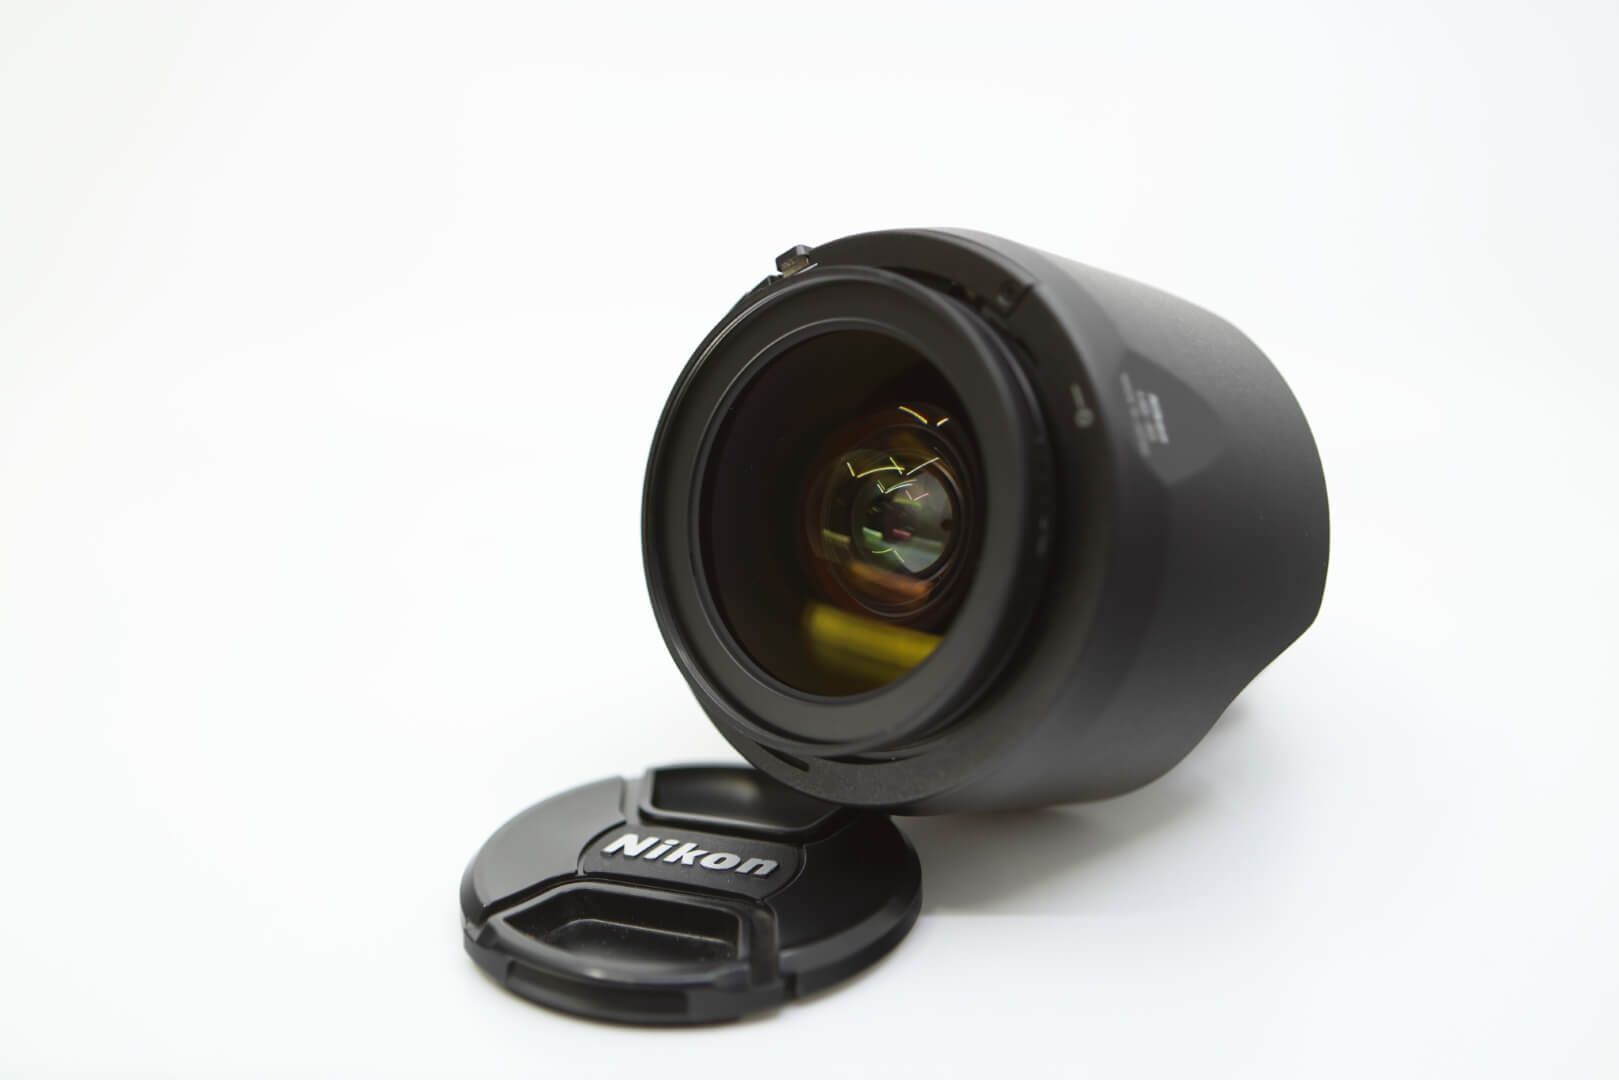 CSB0040 Nikon 24-70mm 345788 - Product Image